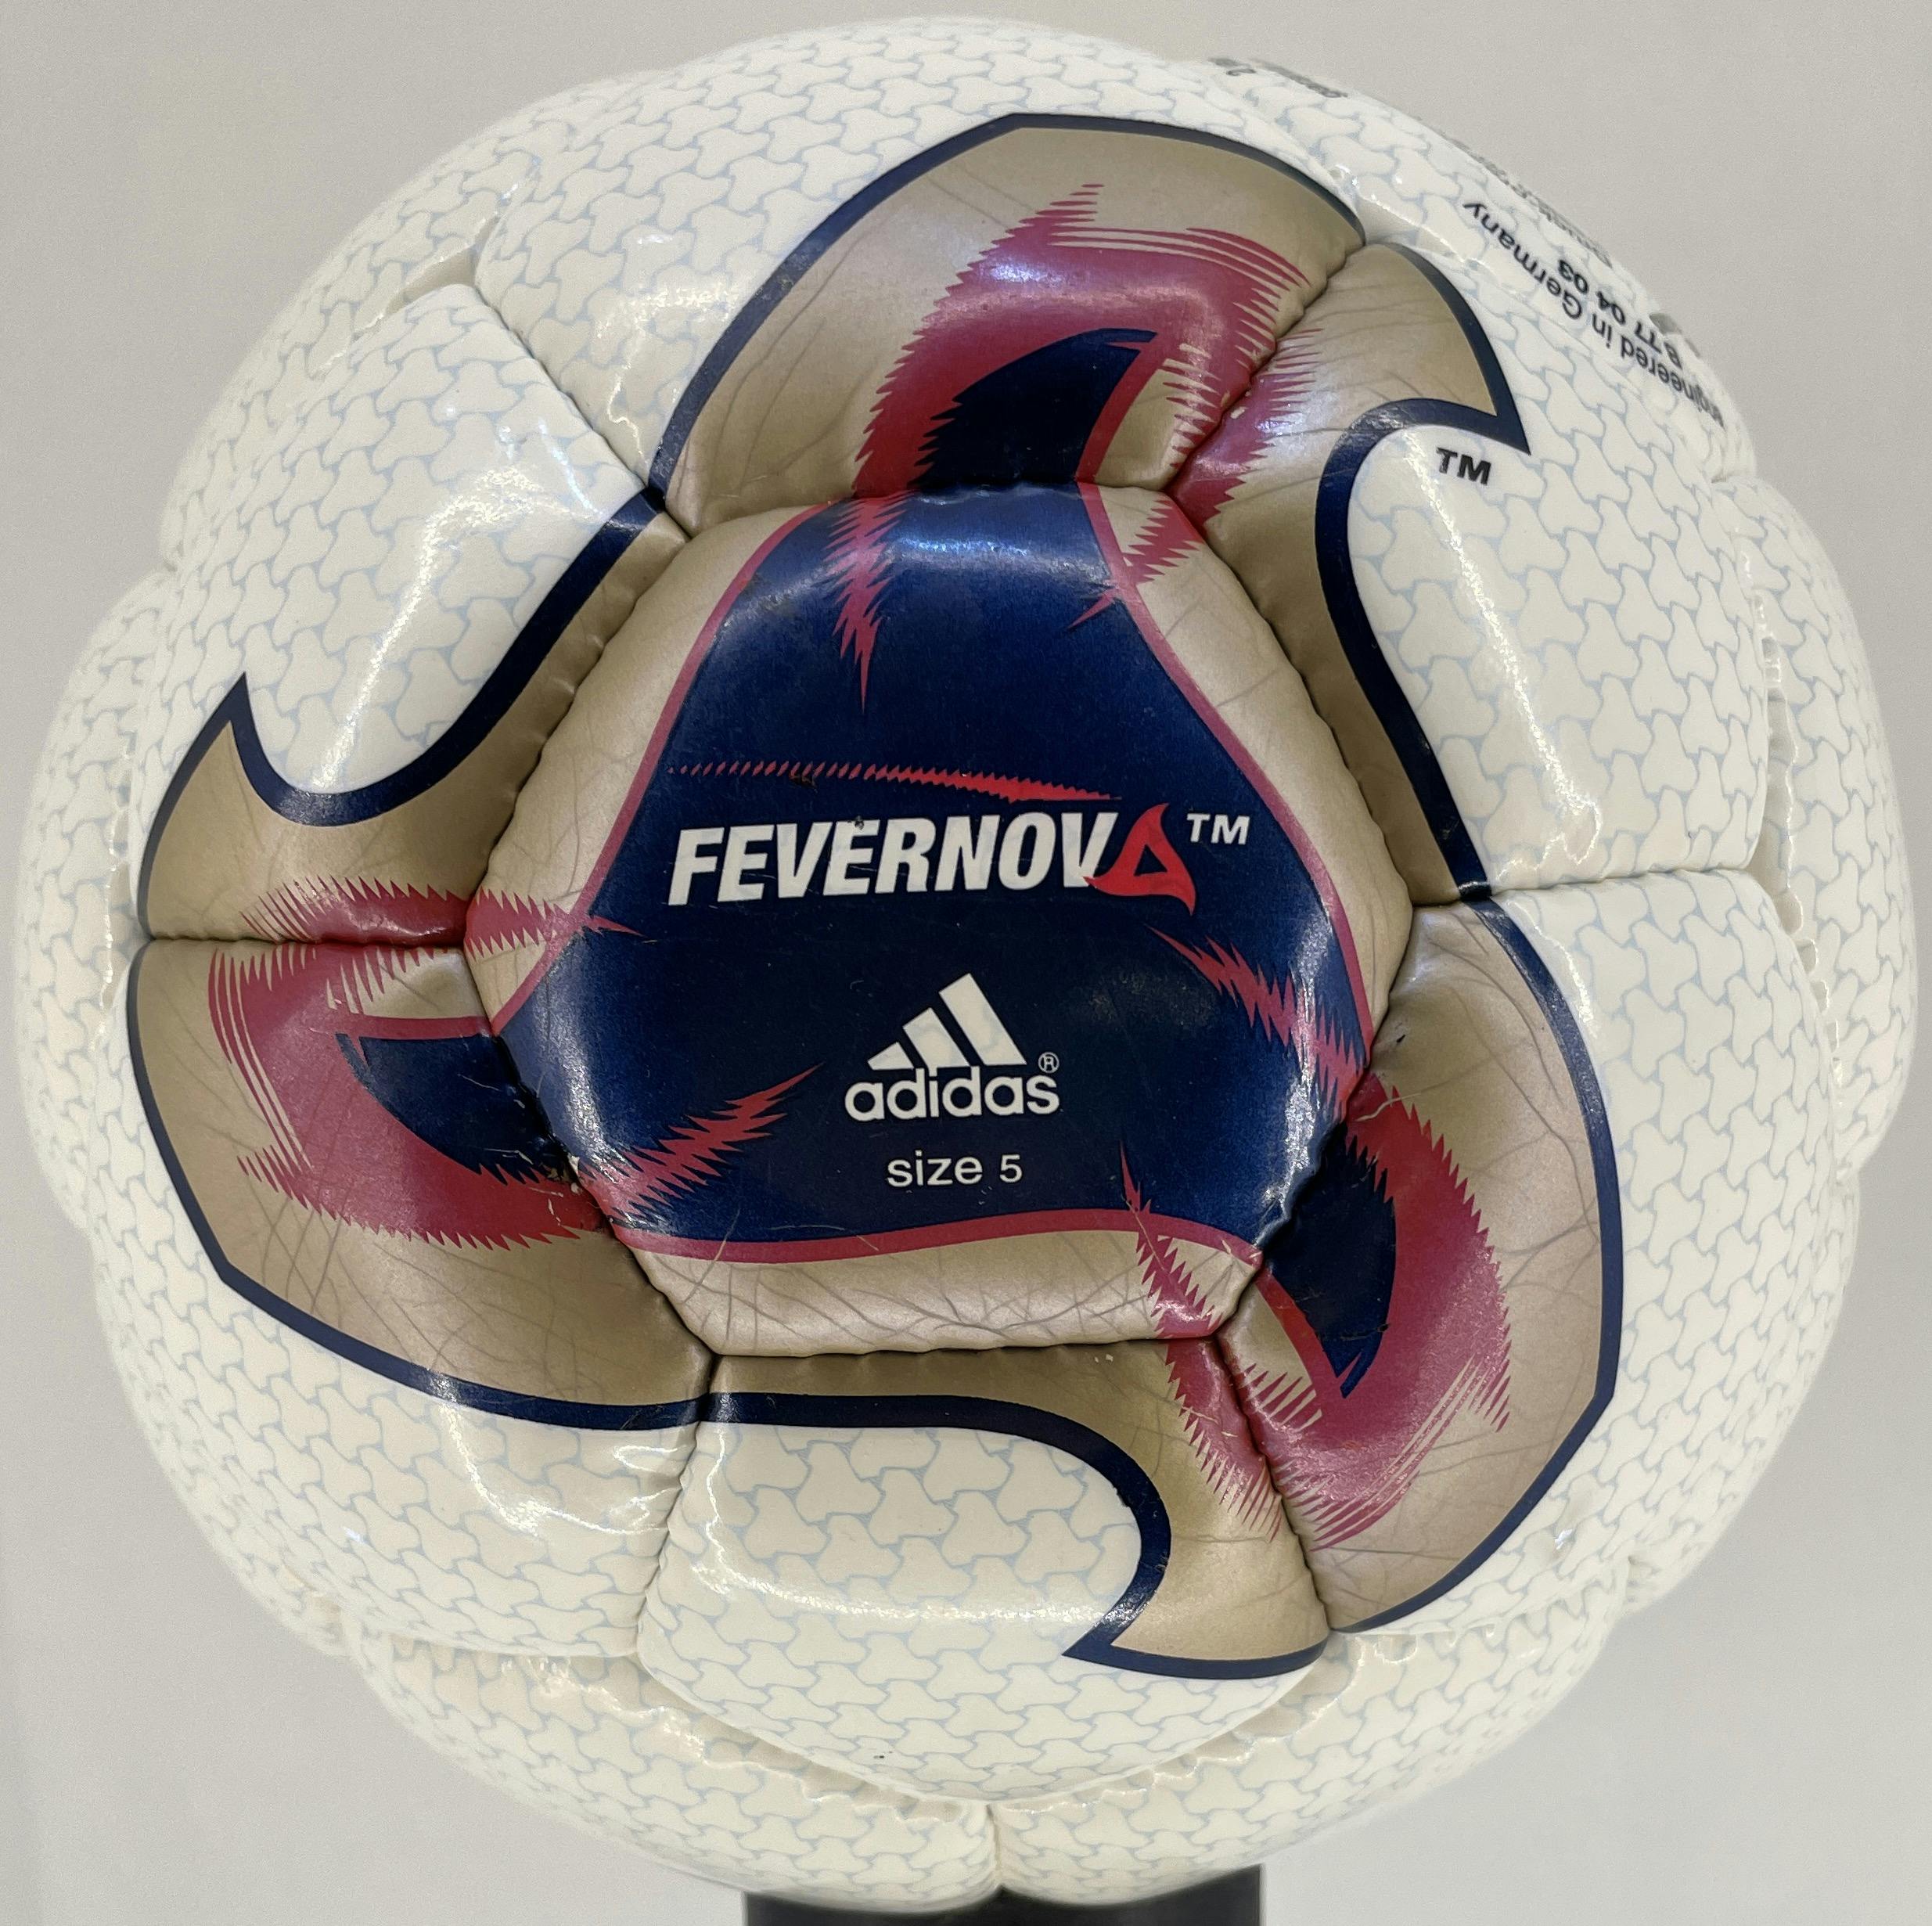 Fevernova Football, 2003